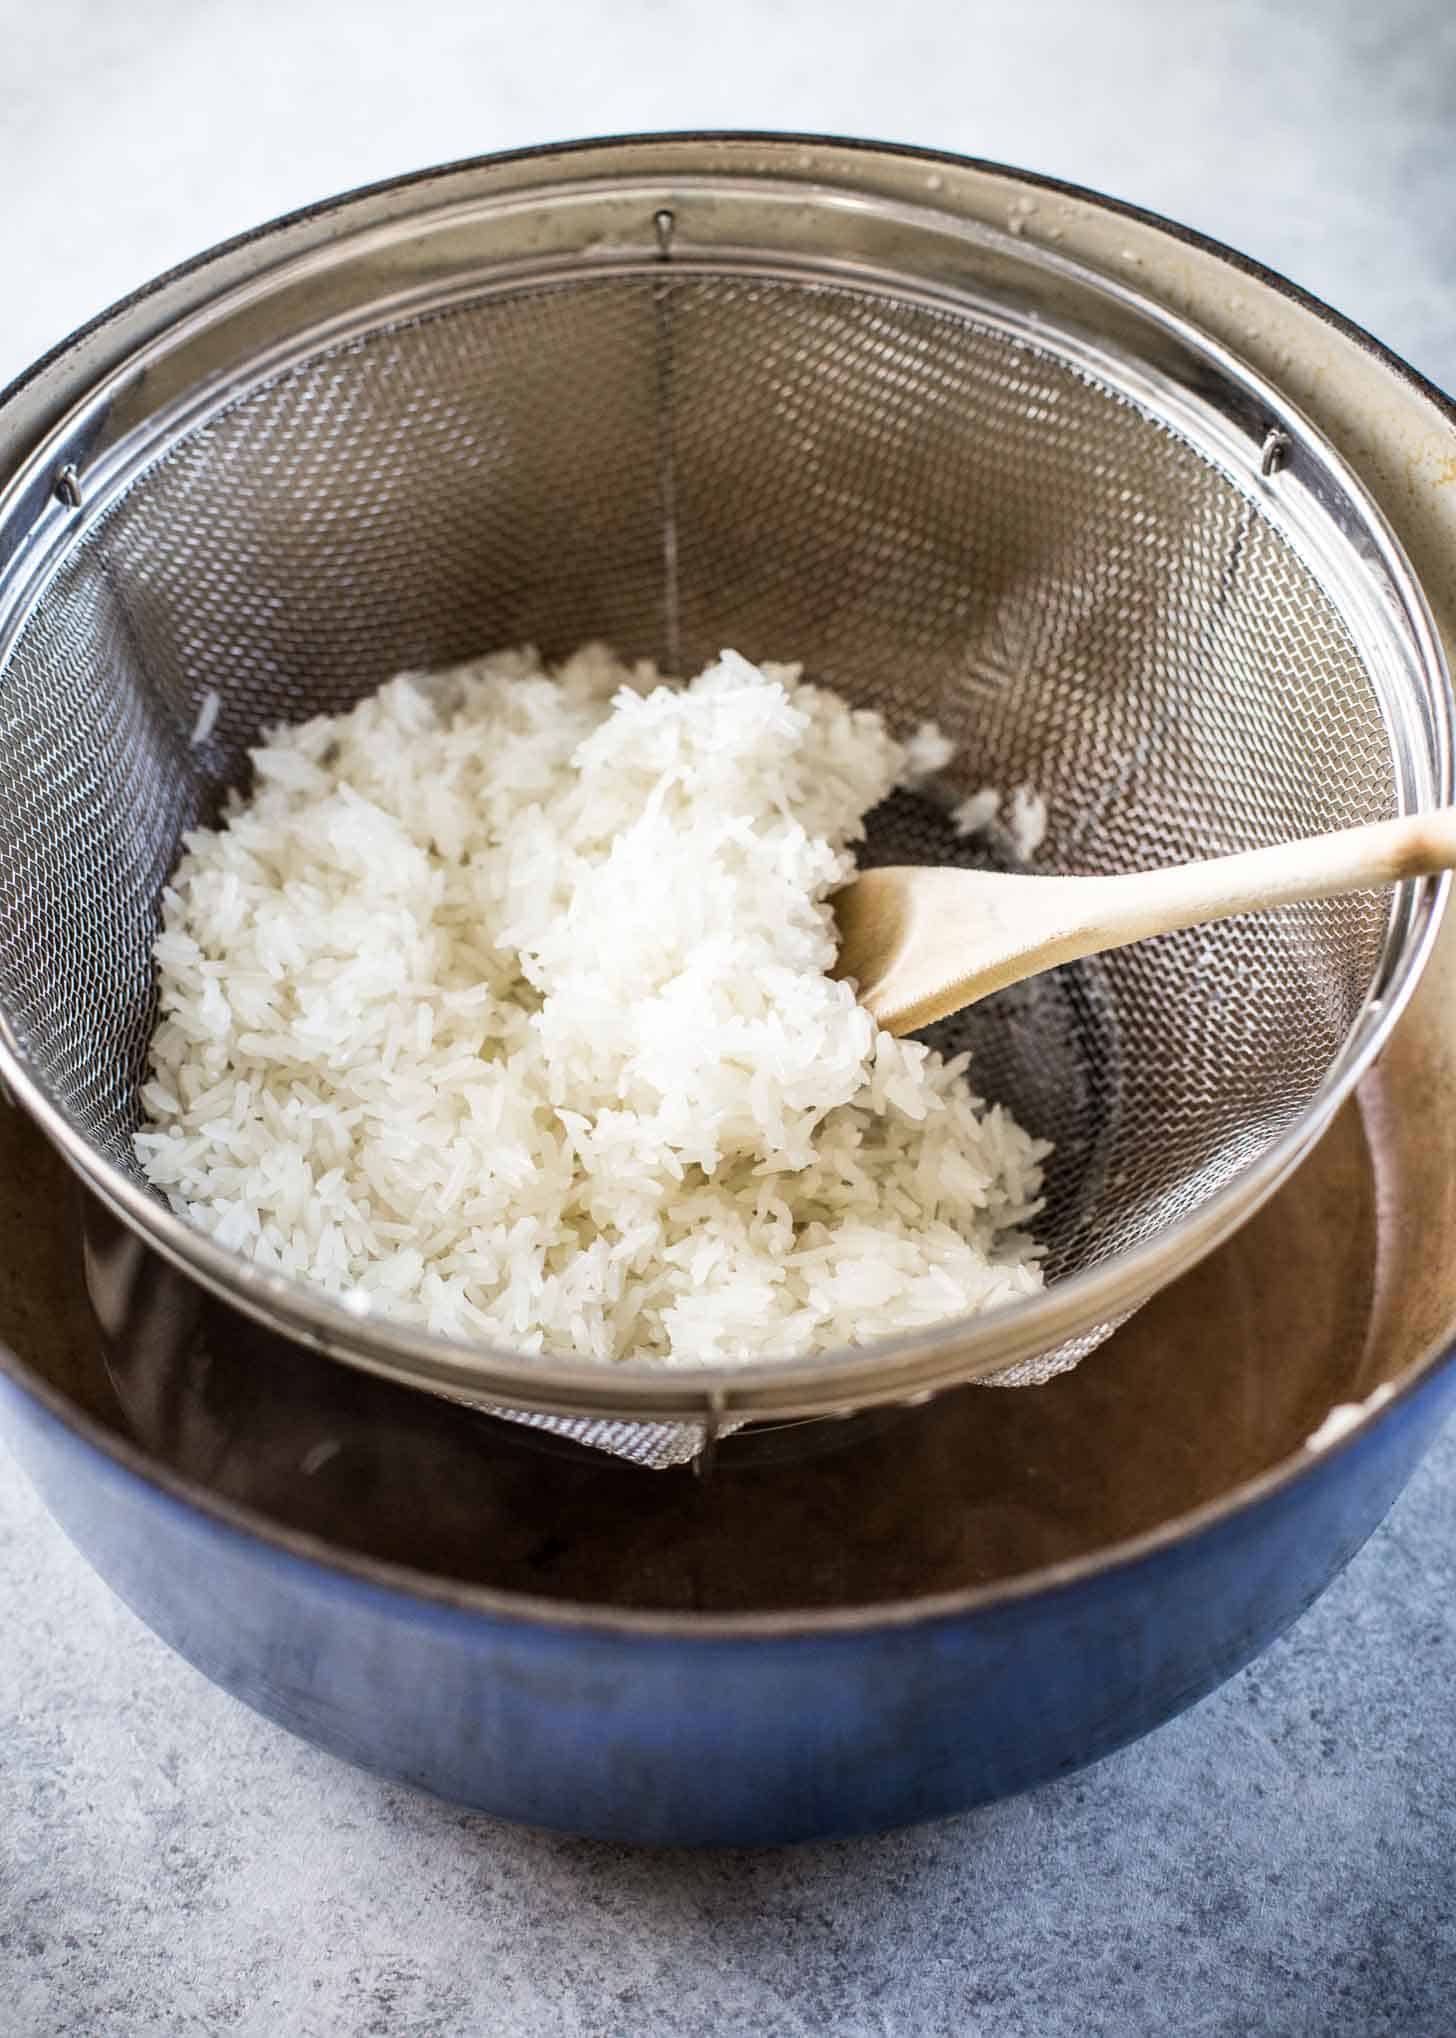 draining rice in a colandar